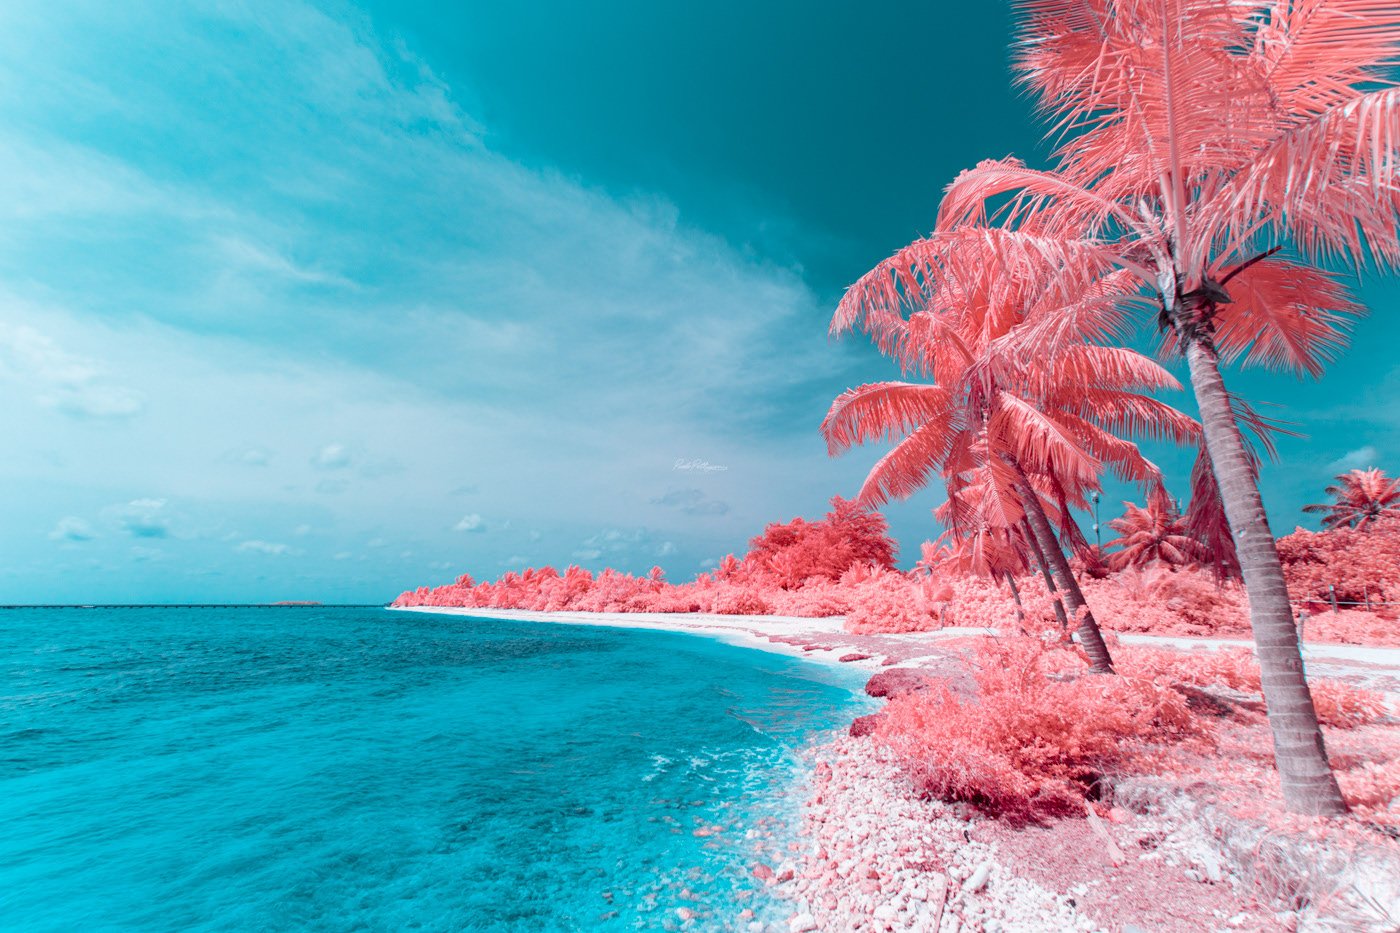 Paolo Pettigiani Reveals More of the Maldives in Surreal Infrared